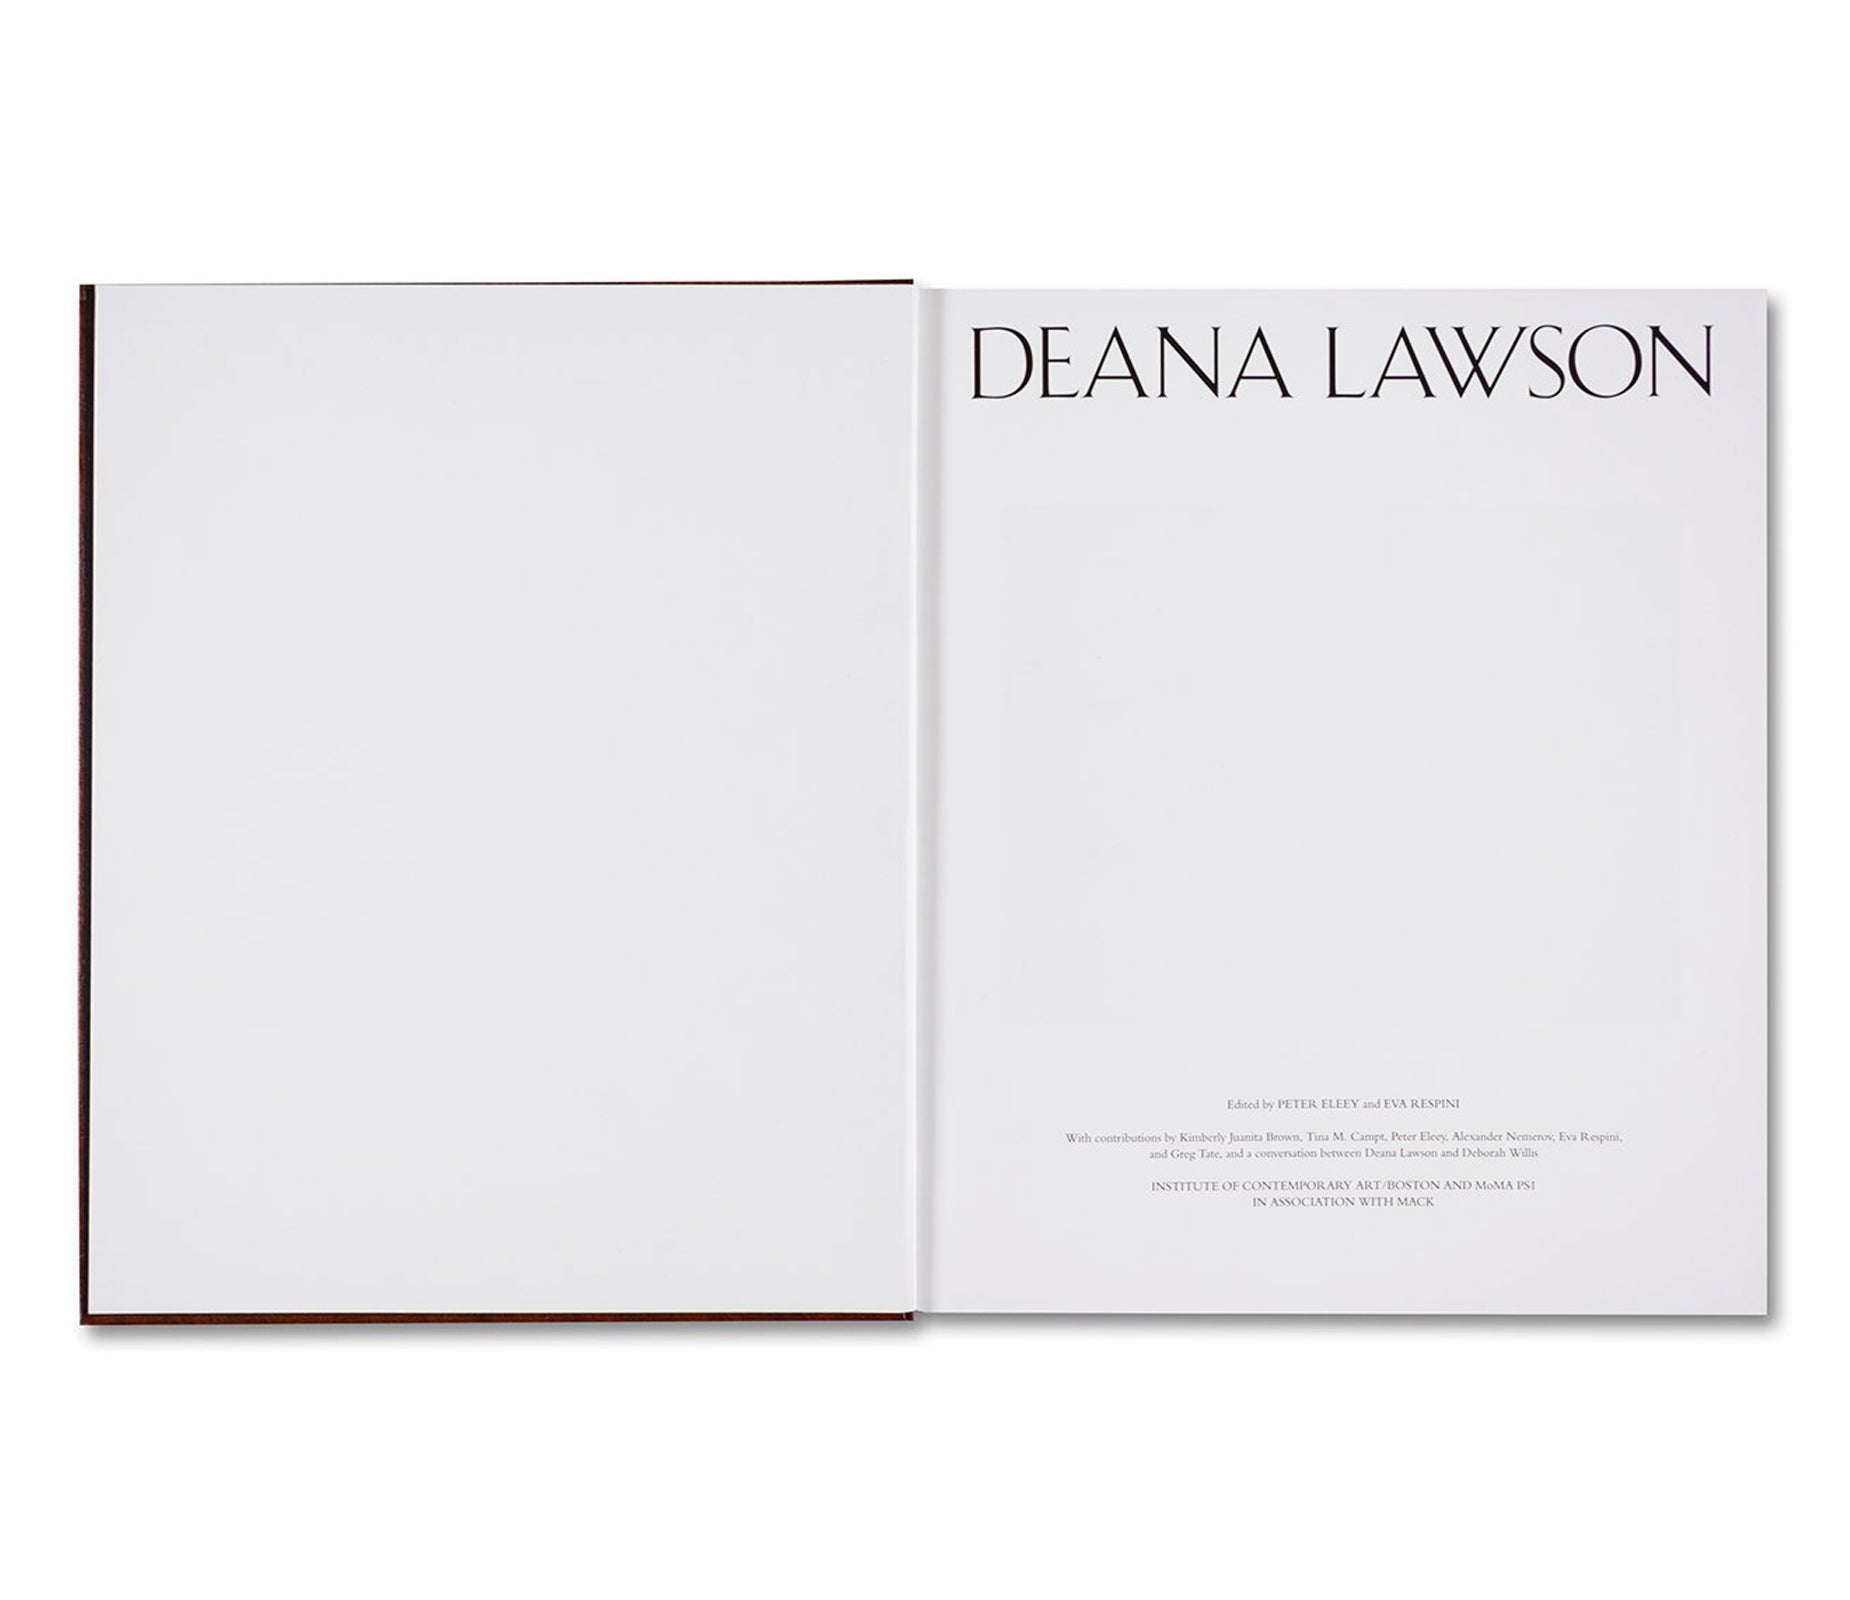 DEANA LAWSON by Deana Lawson